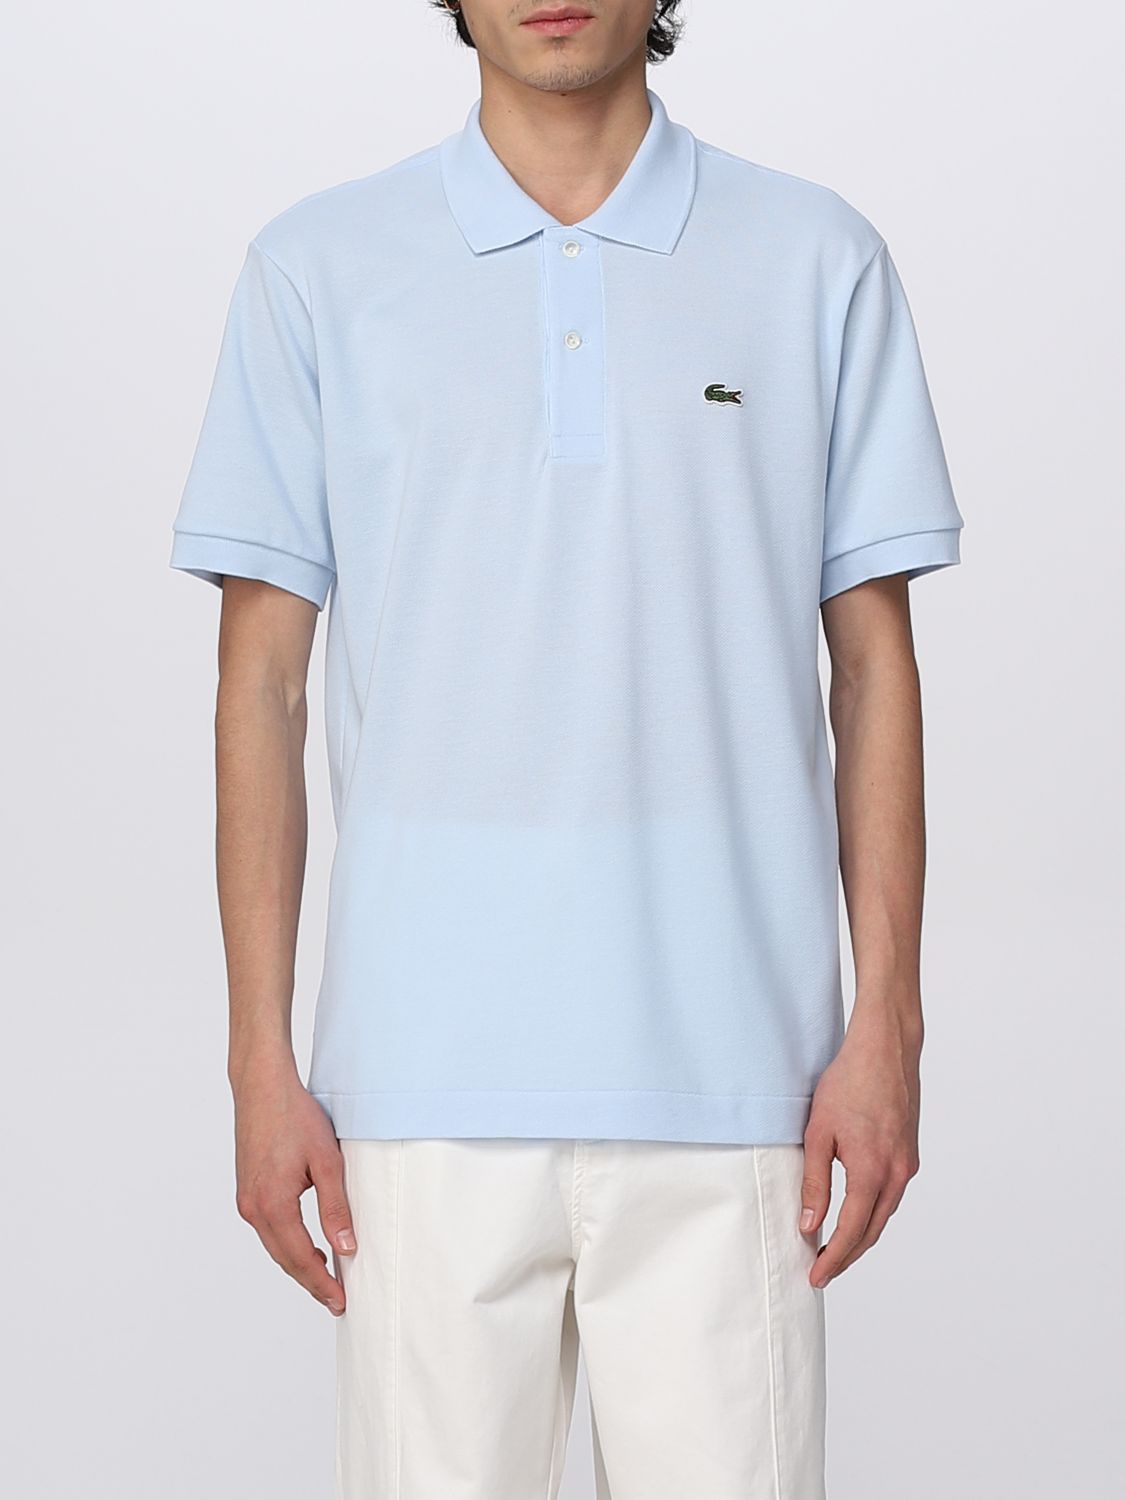 Lacoste Live Logo Polo Shirt-Blue for Men